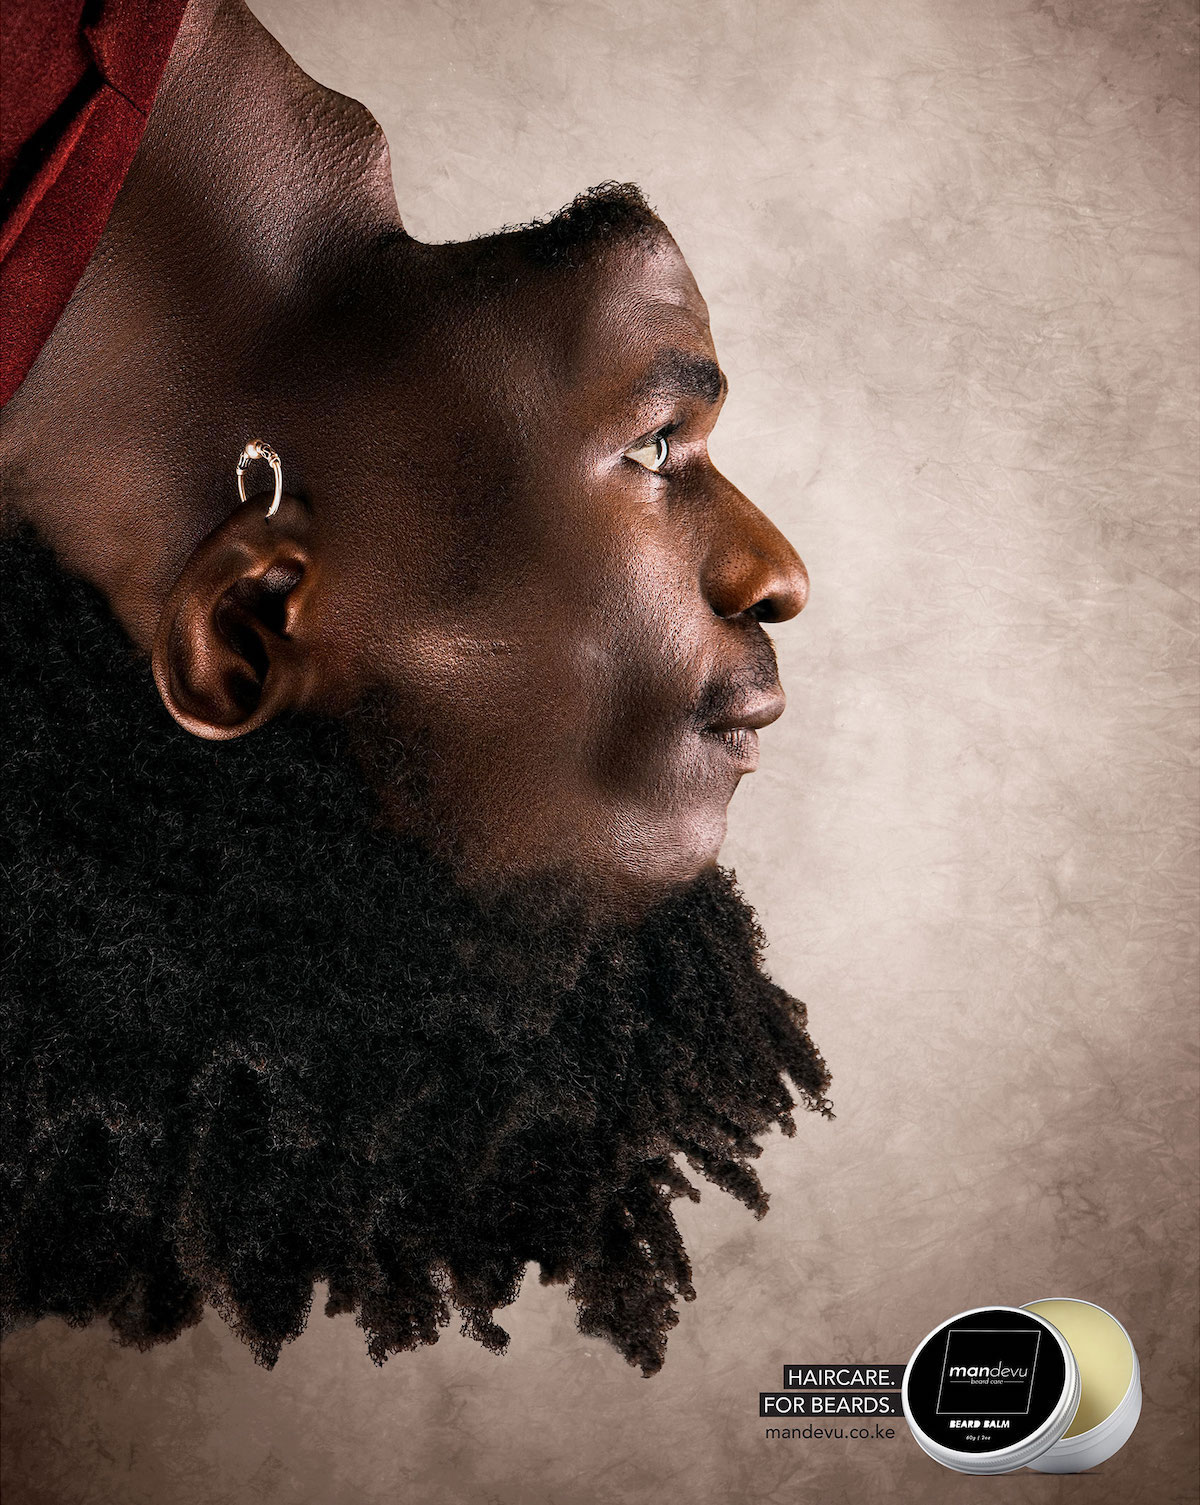 Creative Ads: Mandevu Haircare for Beards